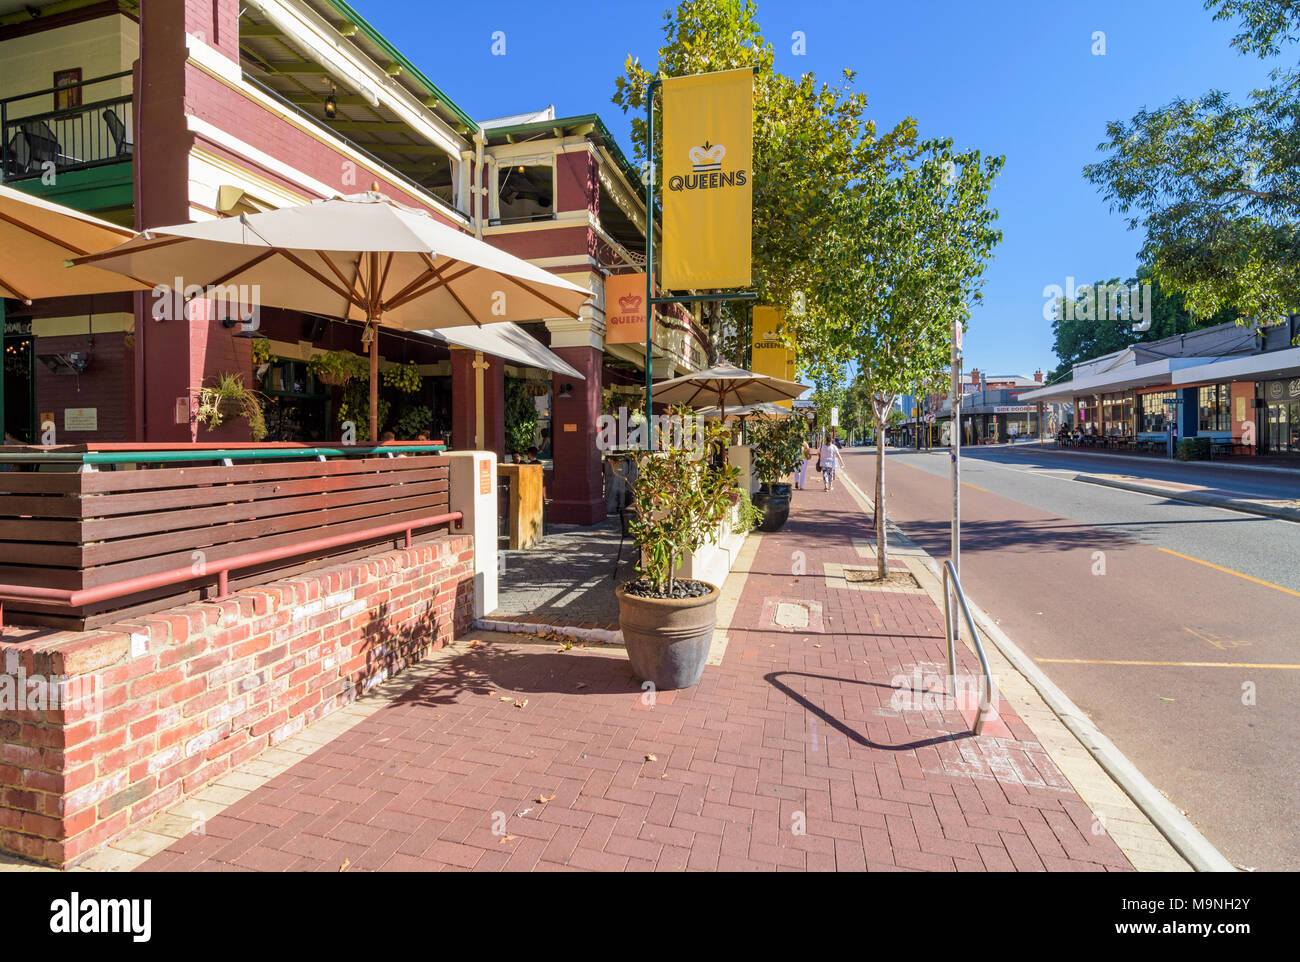 The Queens Tavern, a large rustic pub along Beaufort Street, Highgate, Perth, Western Australia Stock Photo